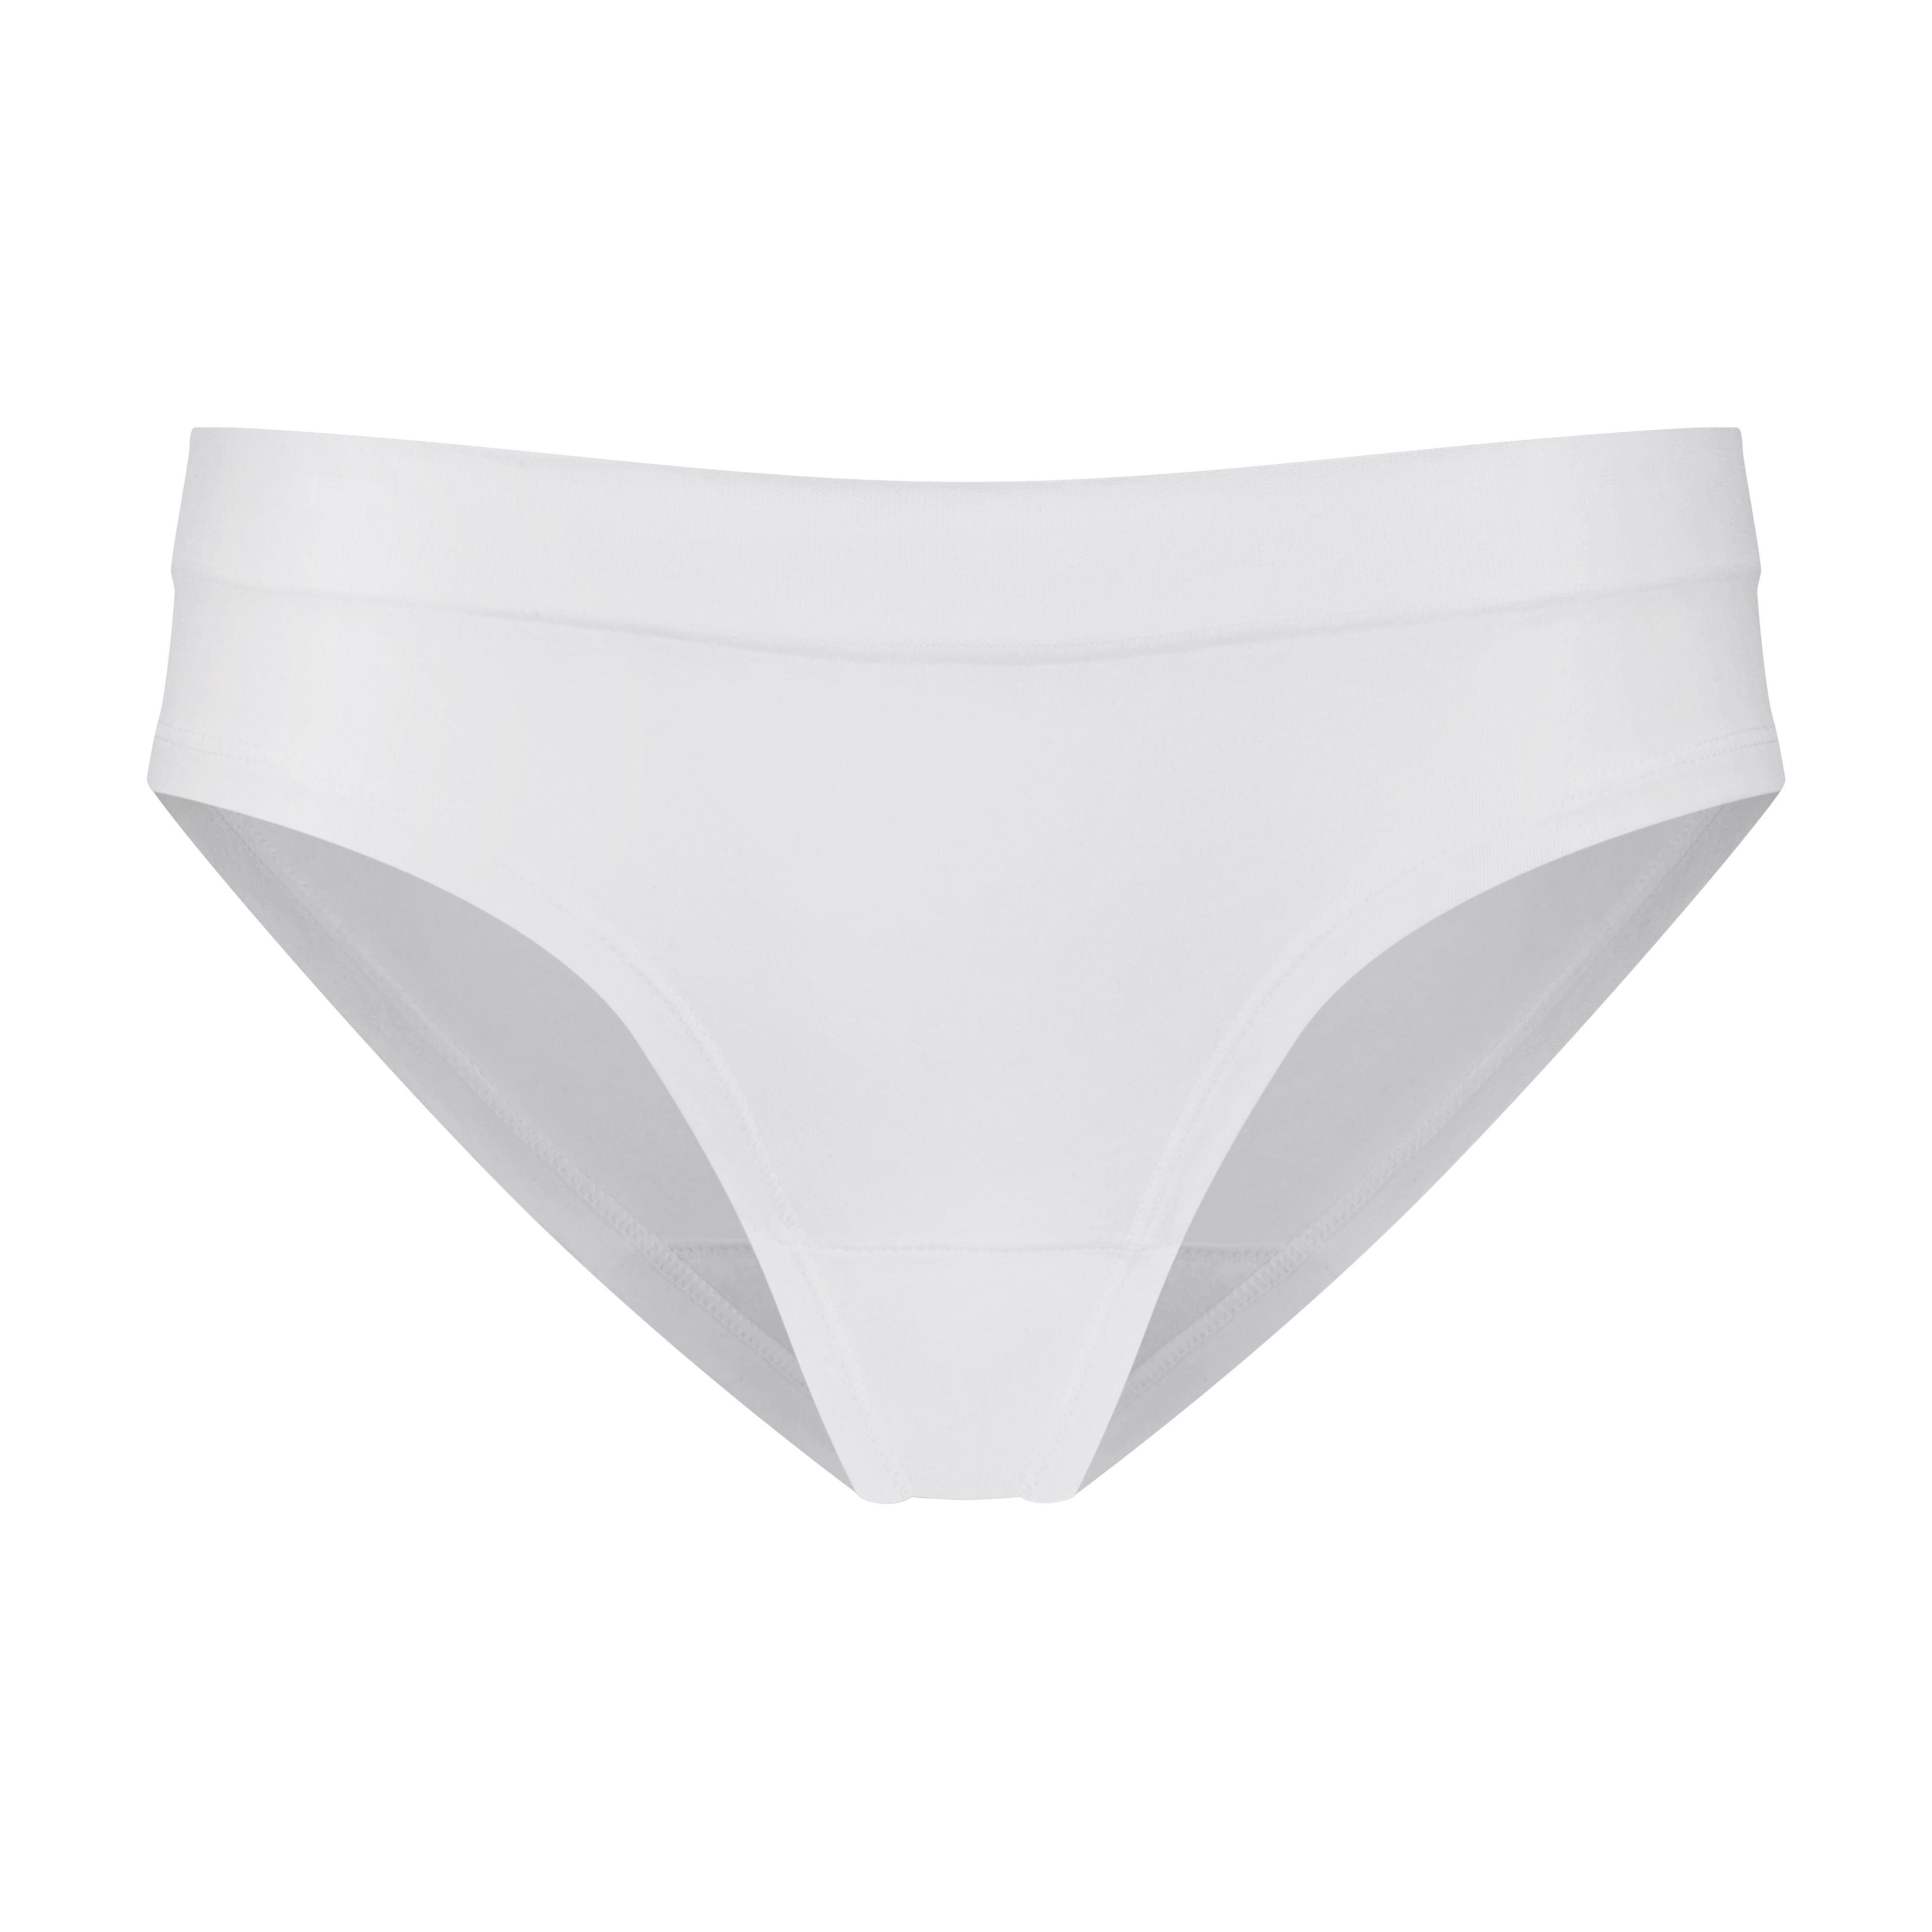 Wearever Women's Incontinence Underwear Reusable Bladder Control Panties  for Feminine Care, 3-Pack 